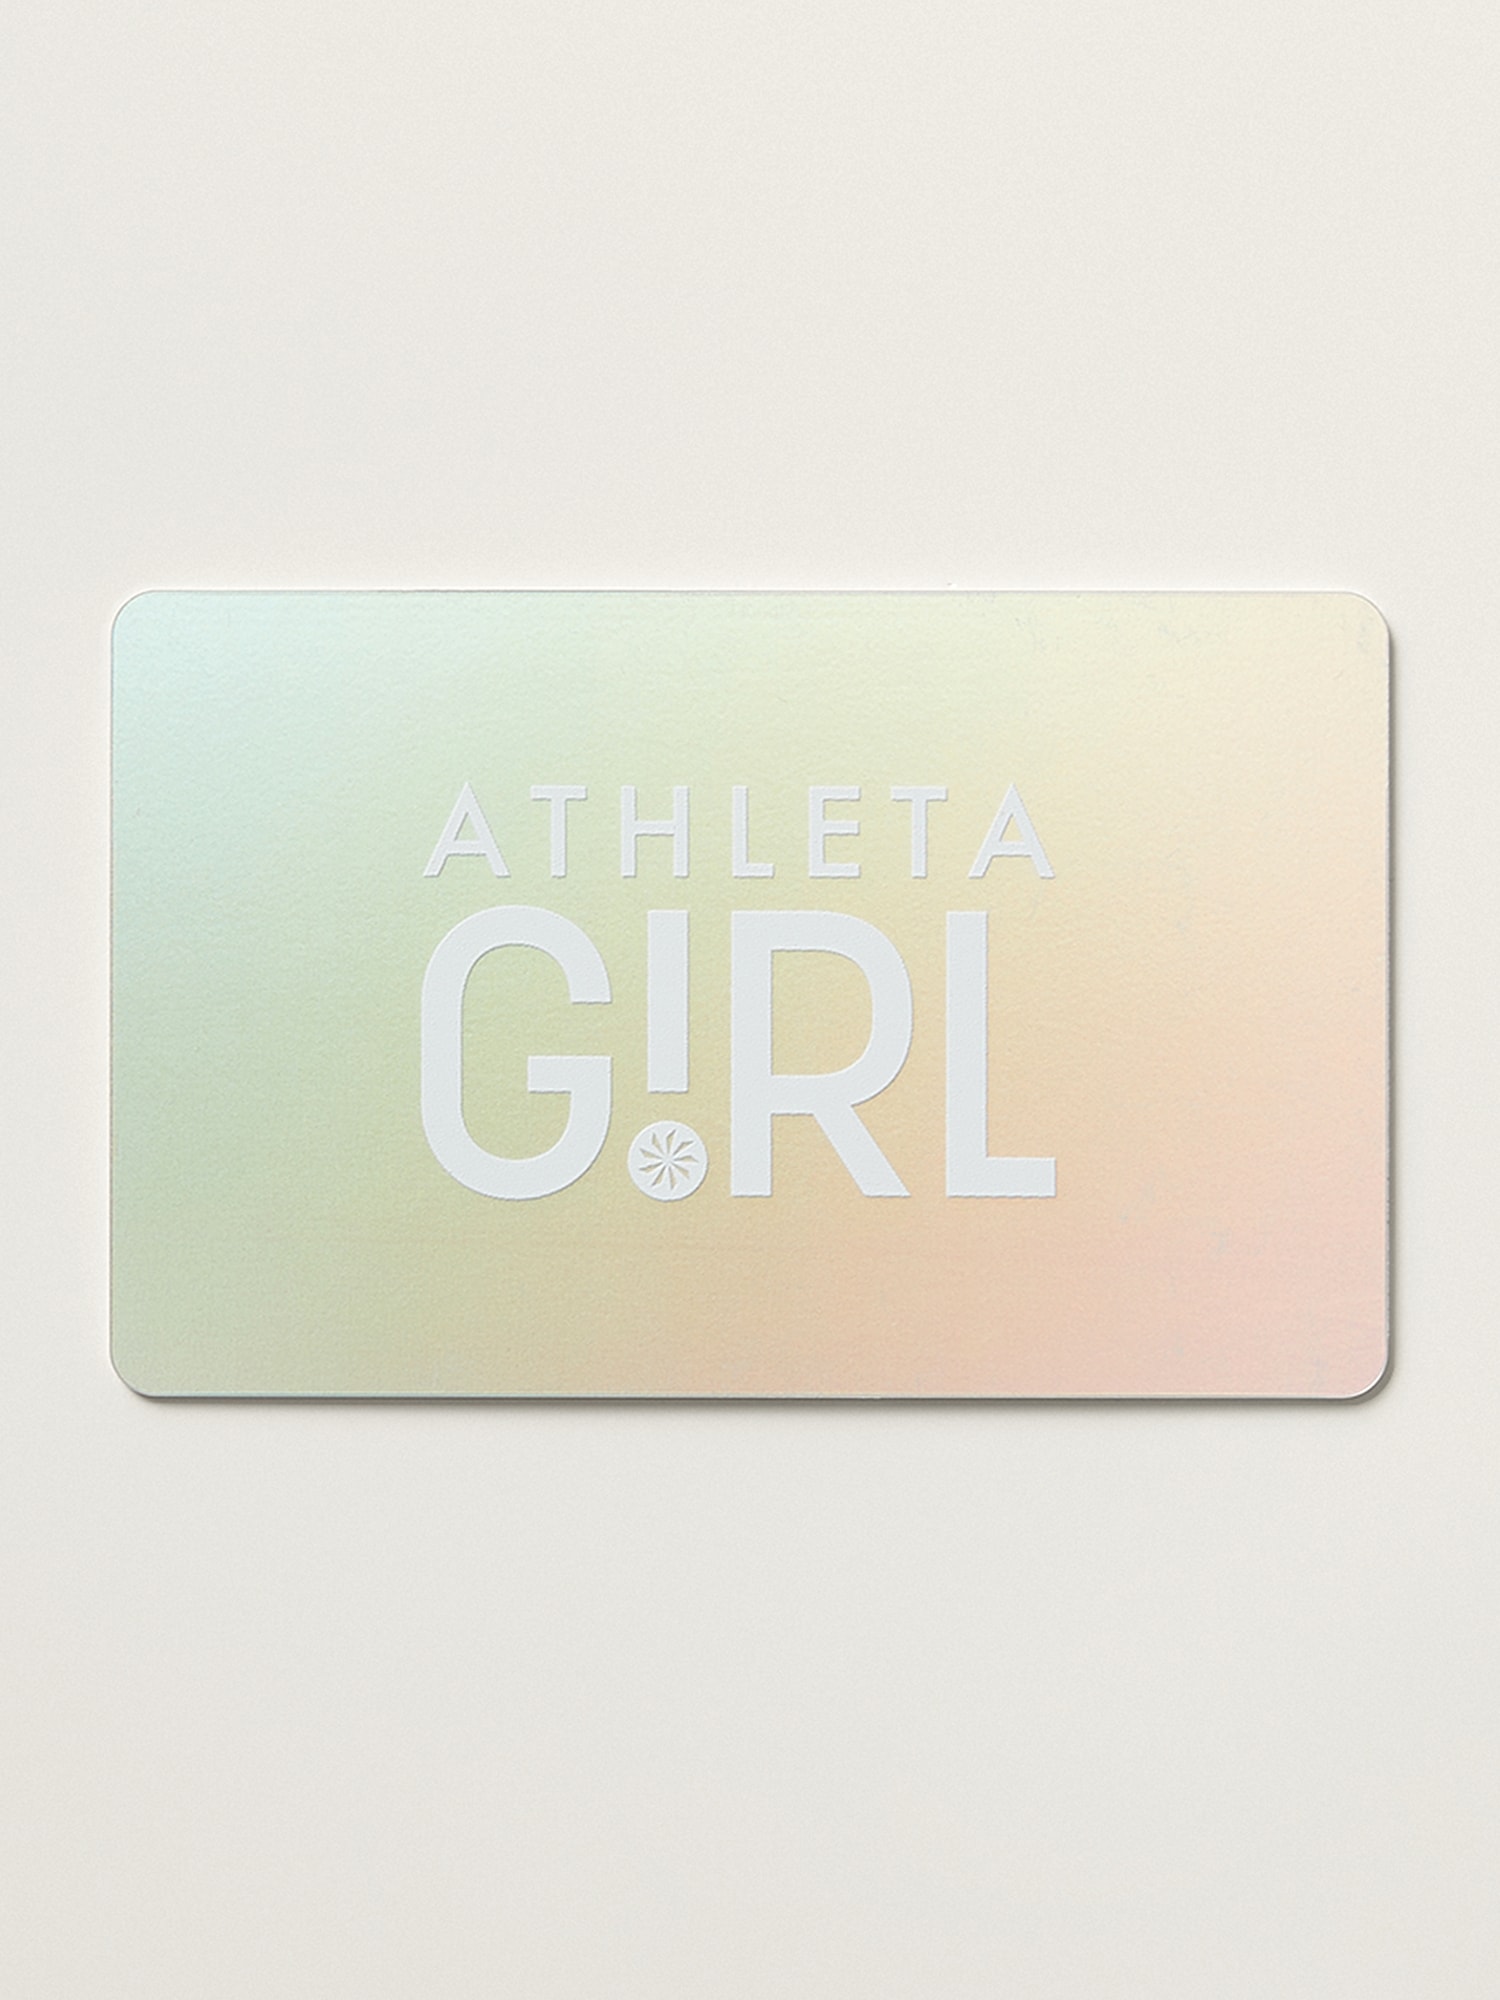 Sell Athleta Gift Cards | Raise